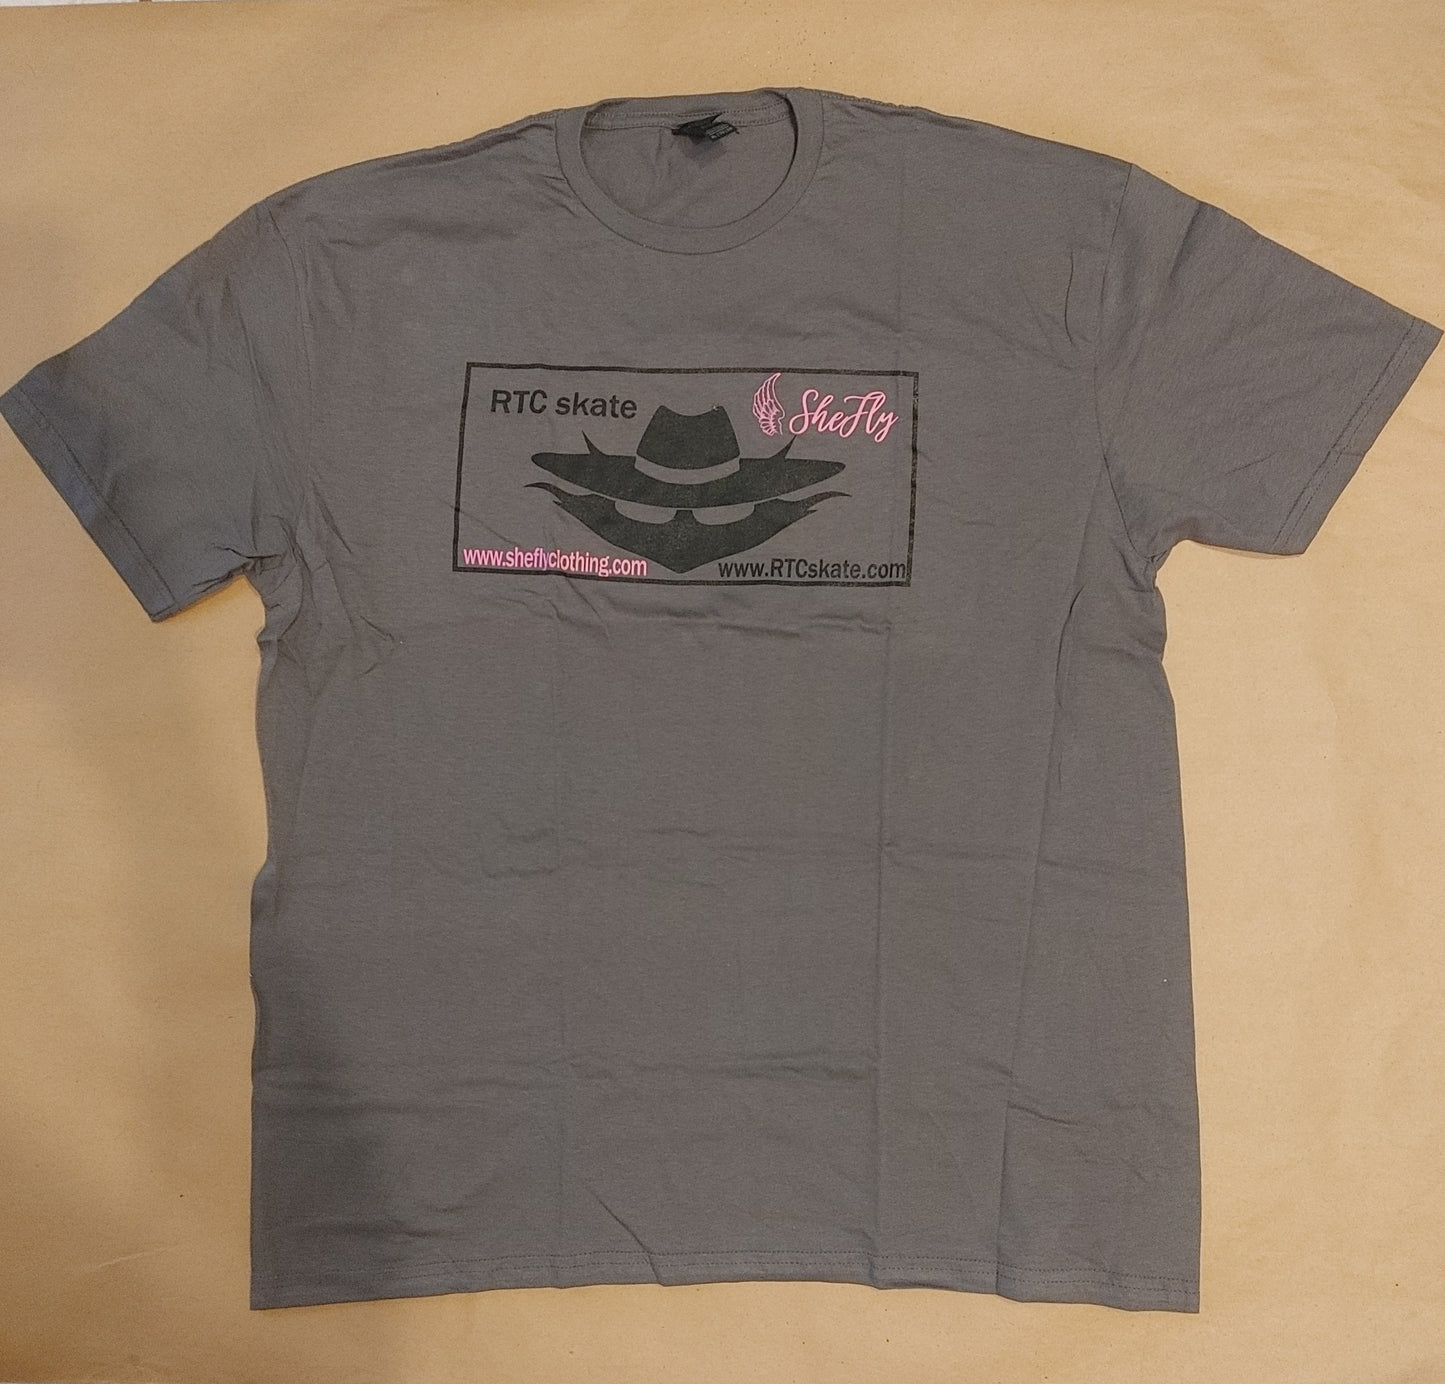 RTCskate & Shefly Short Sleeve Gray T-shirt Collabclothing